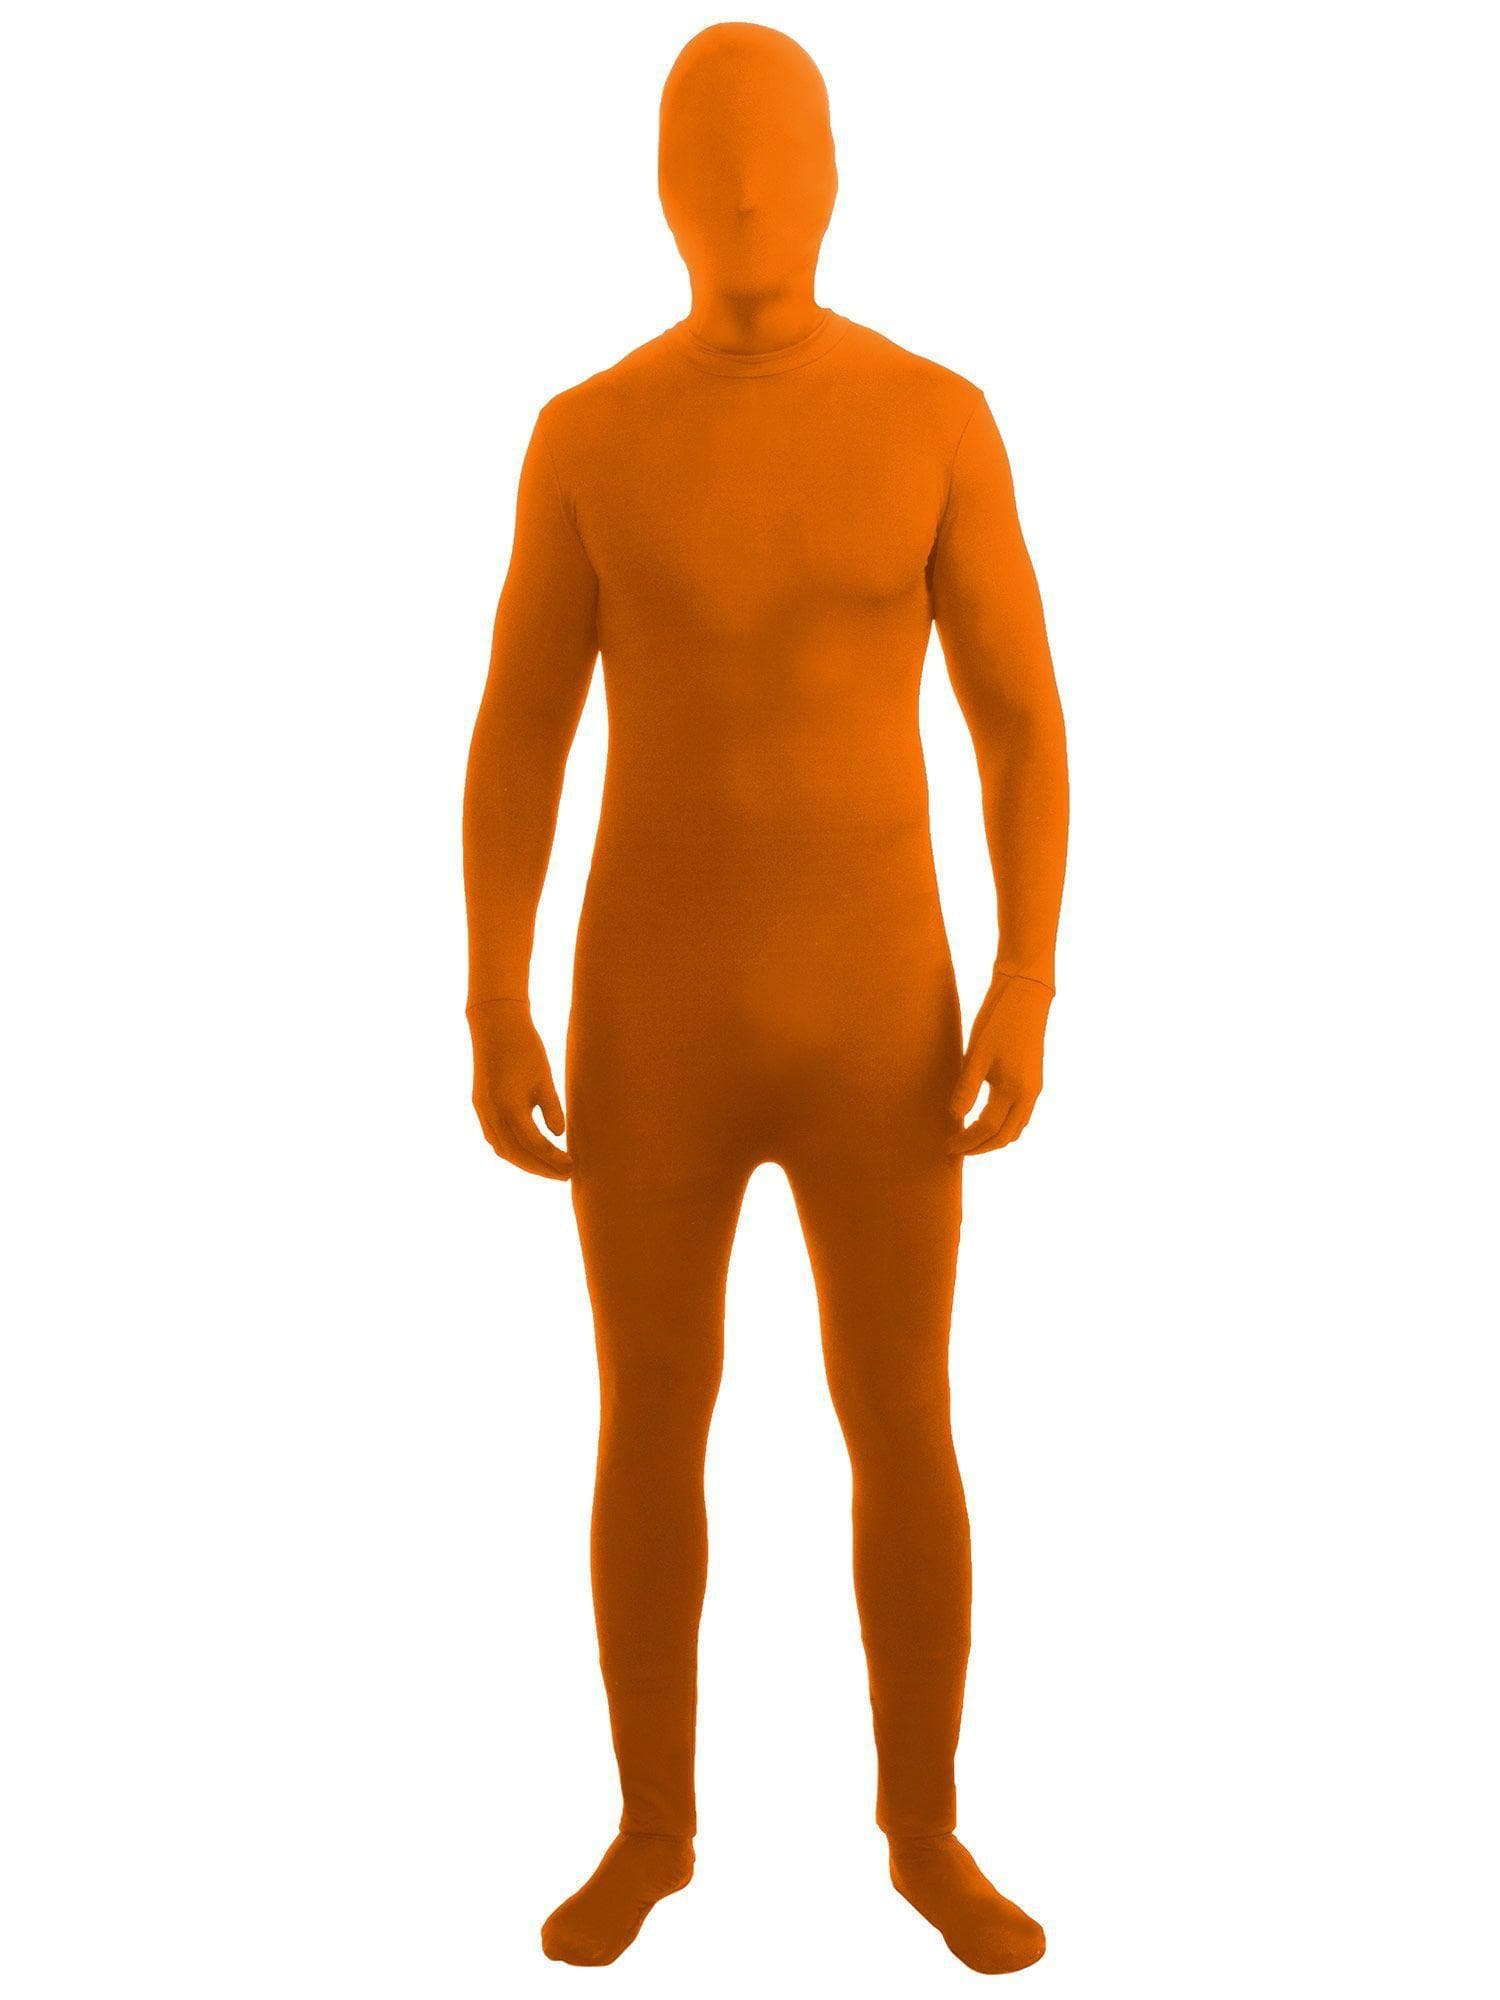 Adult Disappearing Man Suit Orange Costume - costumes.com